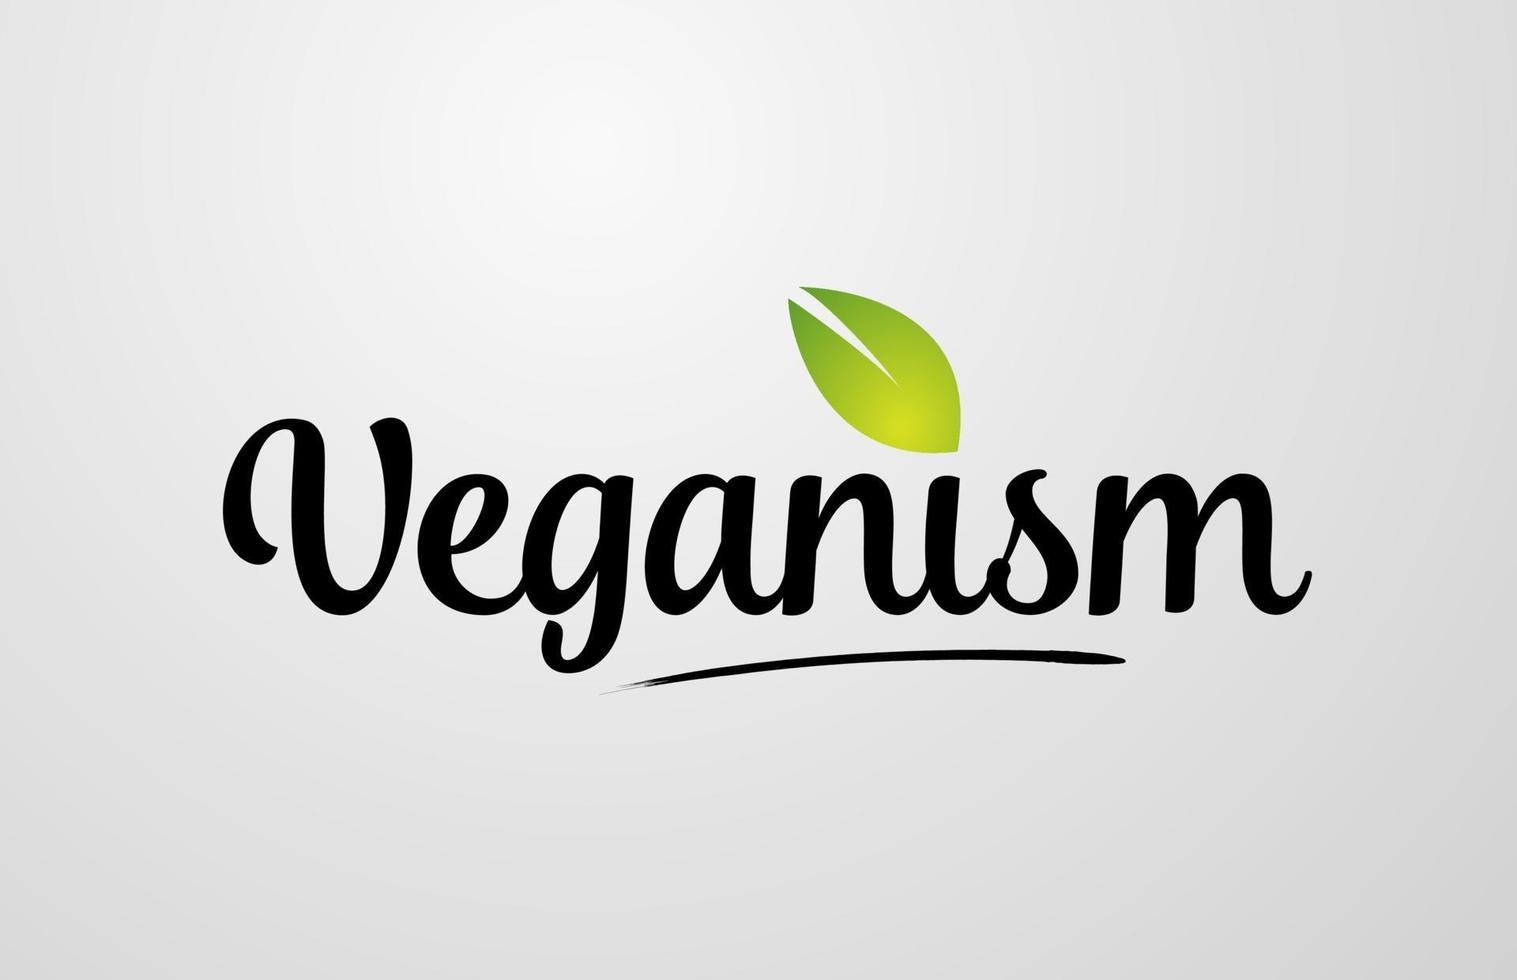 green leaf veganism hand written word text for typography logo design vector